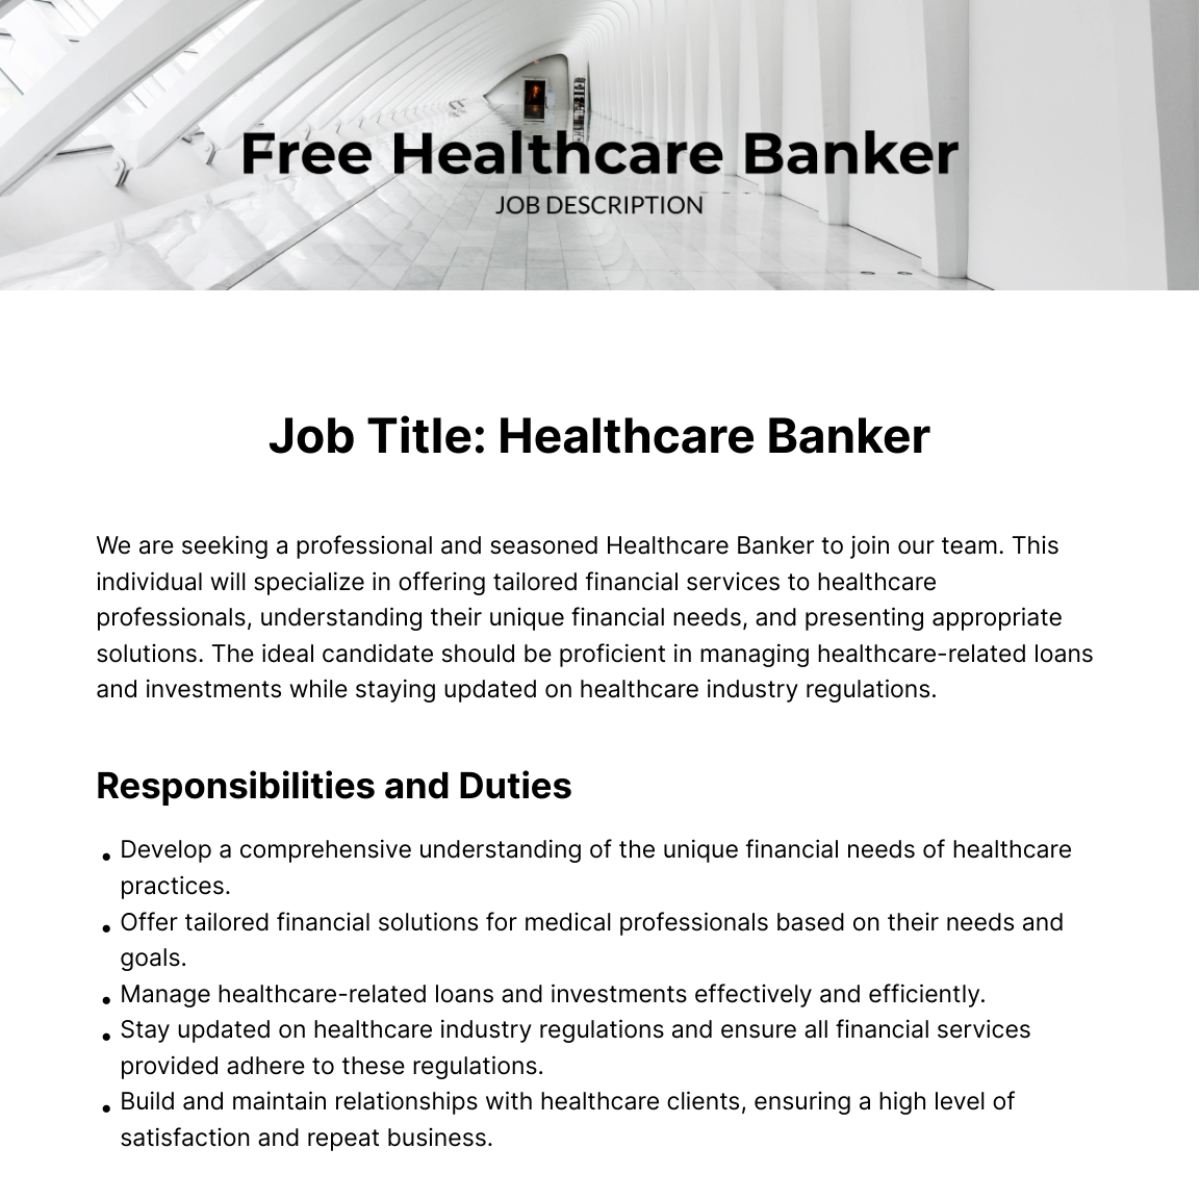 Free Healthcare Banker Job Description Template